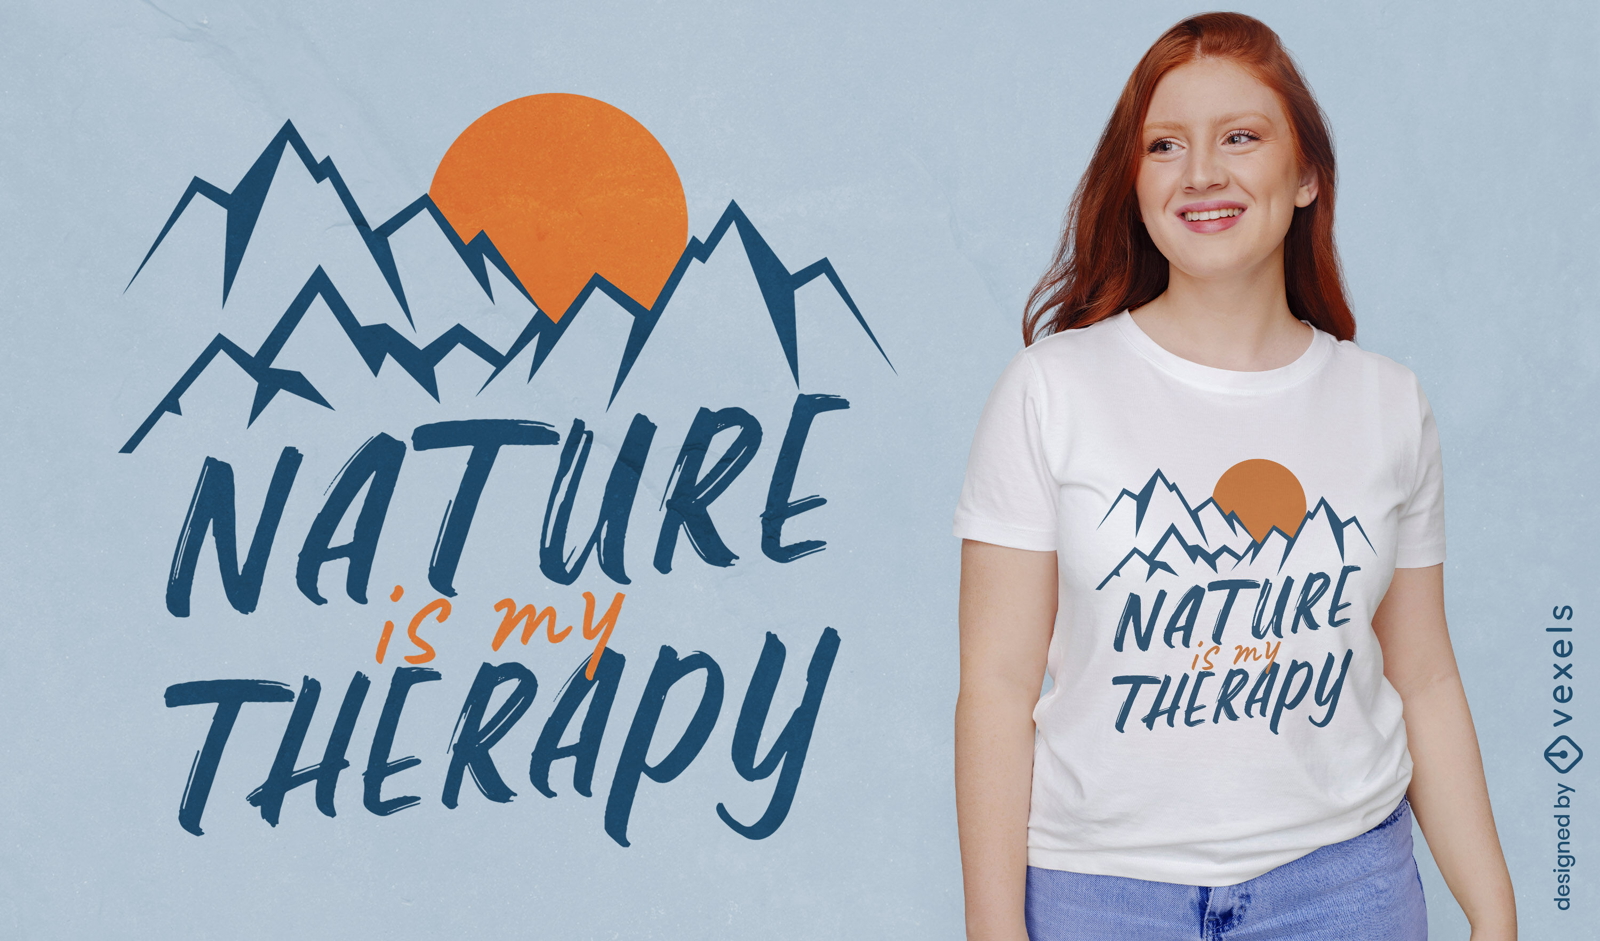 La naturaleza es mi dise?o de camiseta de terapia.